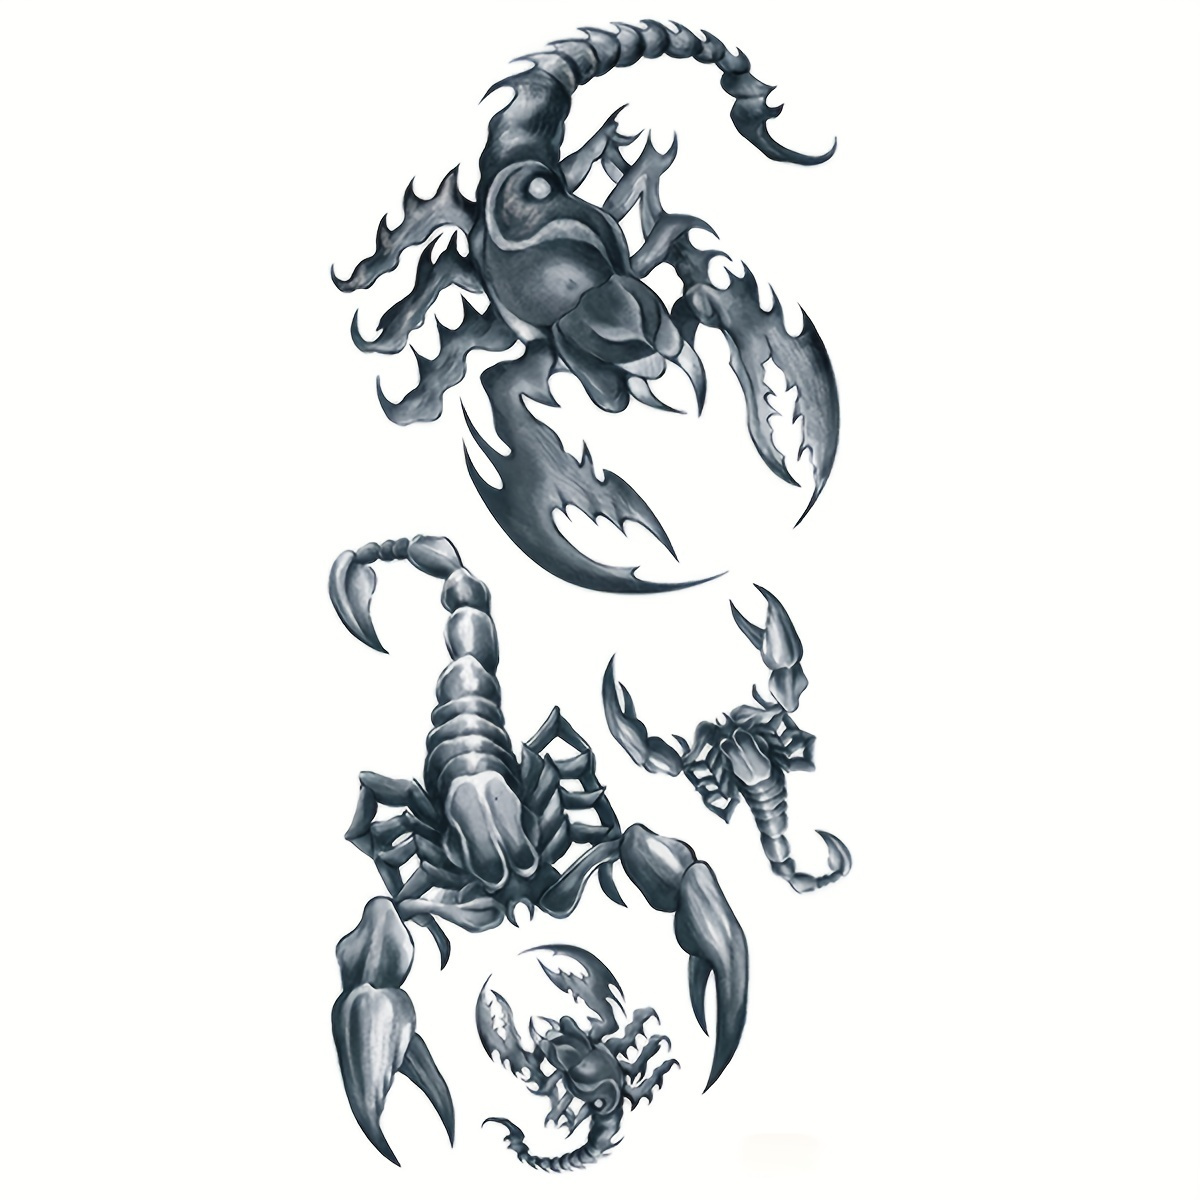 

1 Sheet Waterproof Scorpion Temporary Tattoo - Long-lasting Arm, Leg, Chest, Back Body Art Stickers